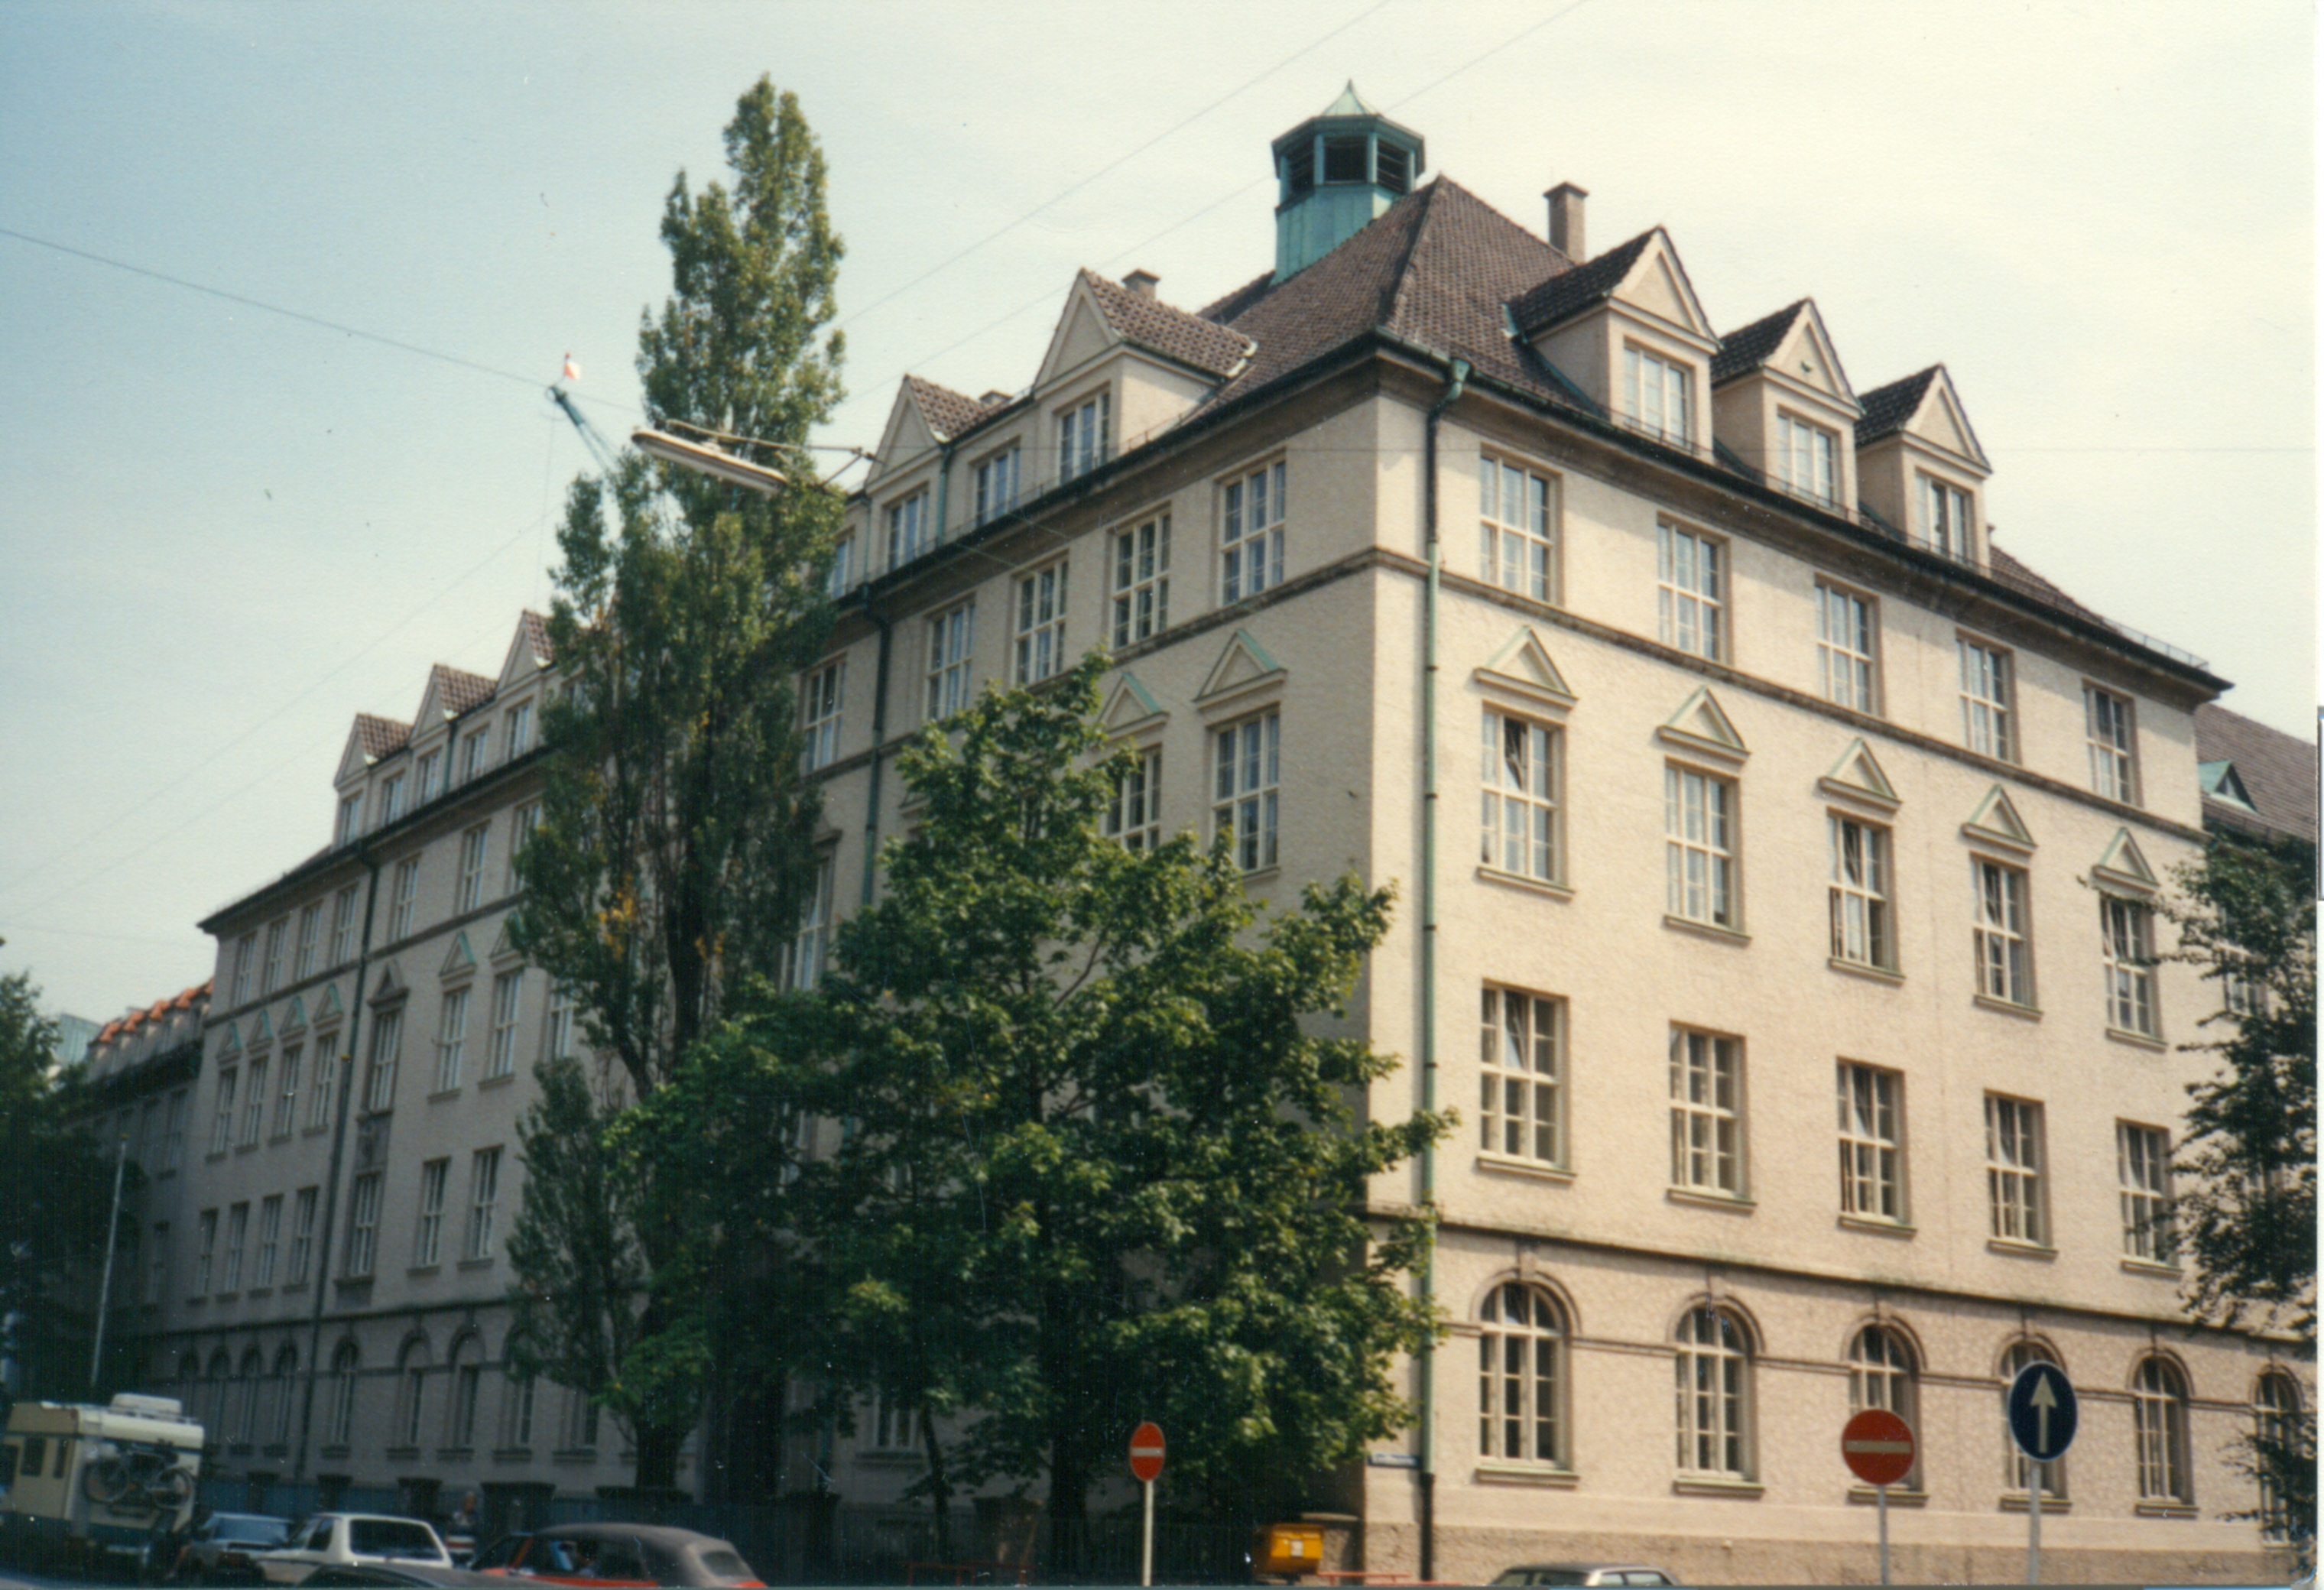 Lothstr 34 in München im September 1990